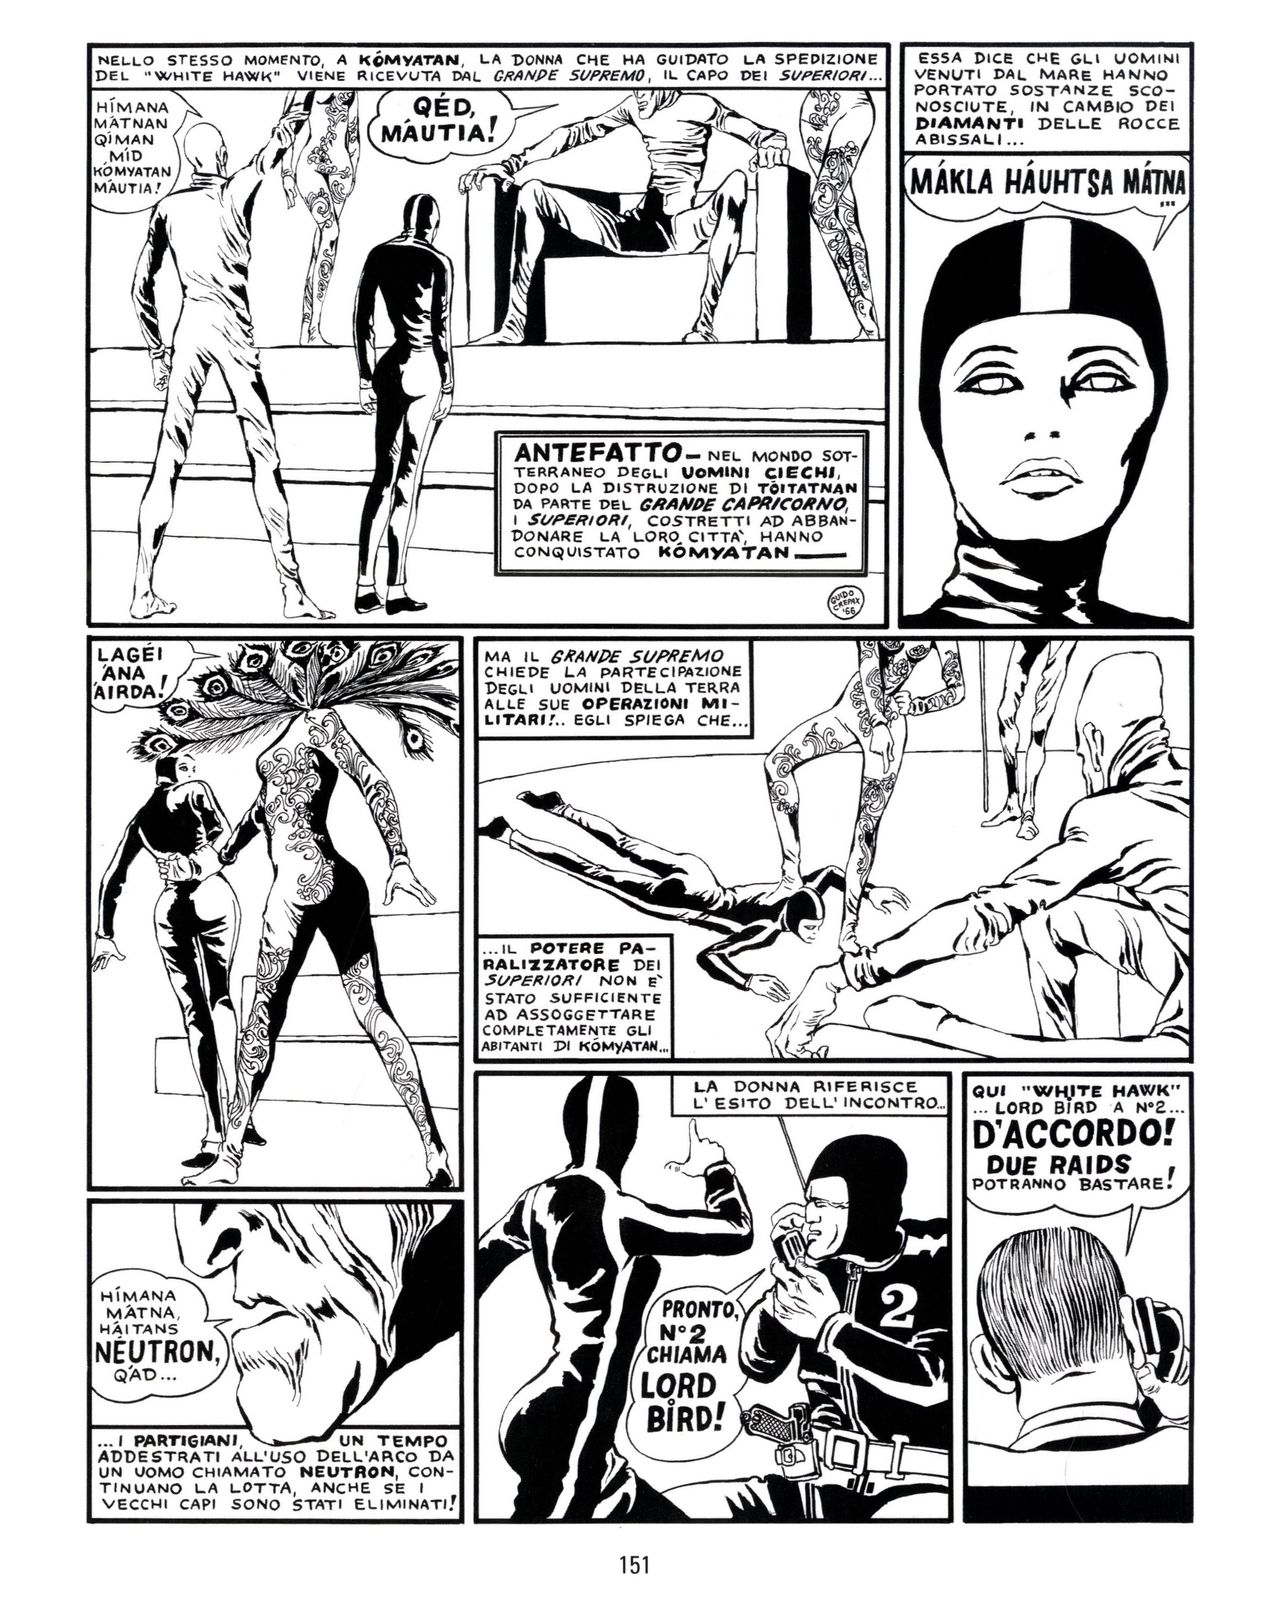 [Guido Crepax] Erotica Fumetti #25 : L'ascesa dei sotterranei : I cavalieri ciechi [Italian] 152